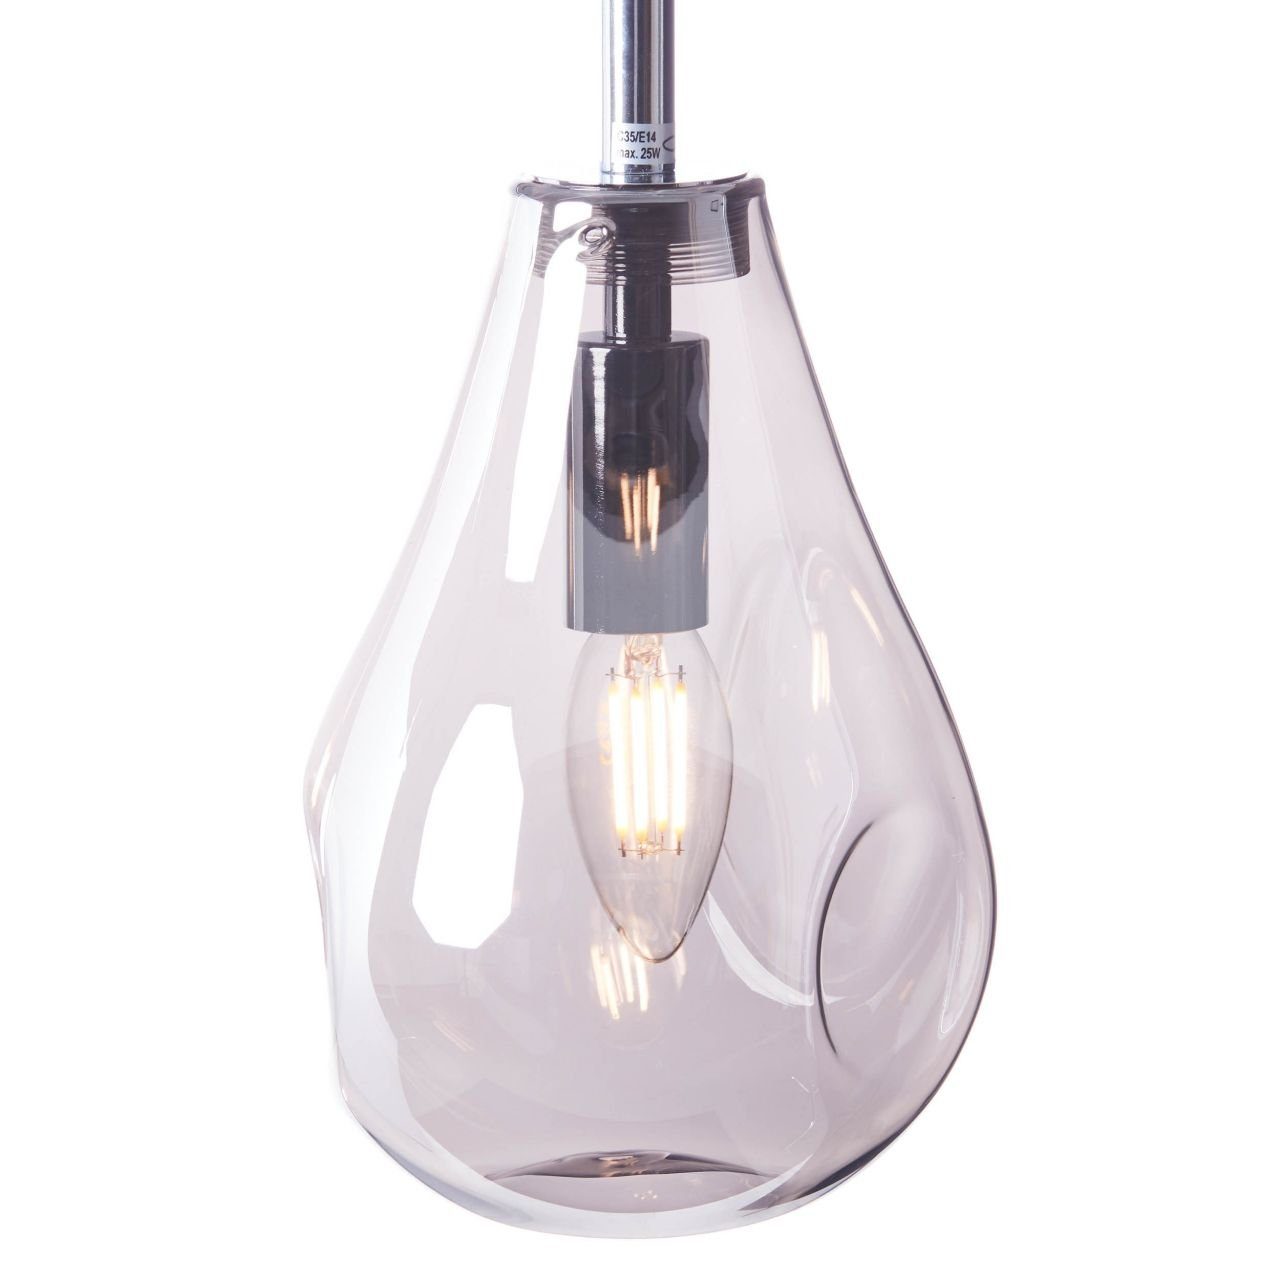 rauchglas/chrom, D45 Drops Lampe, 3x Drops, Pendelleuchte Glas/Metall, Brilliant 3flg Pendelleuchte